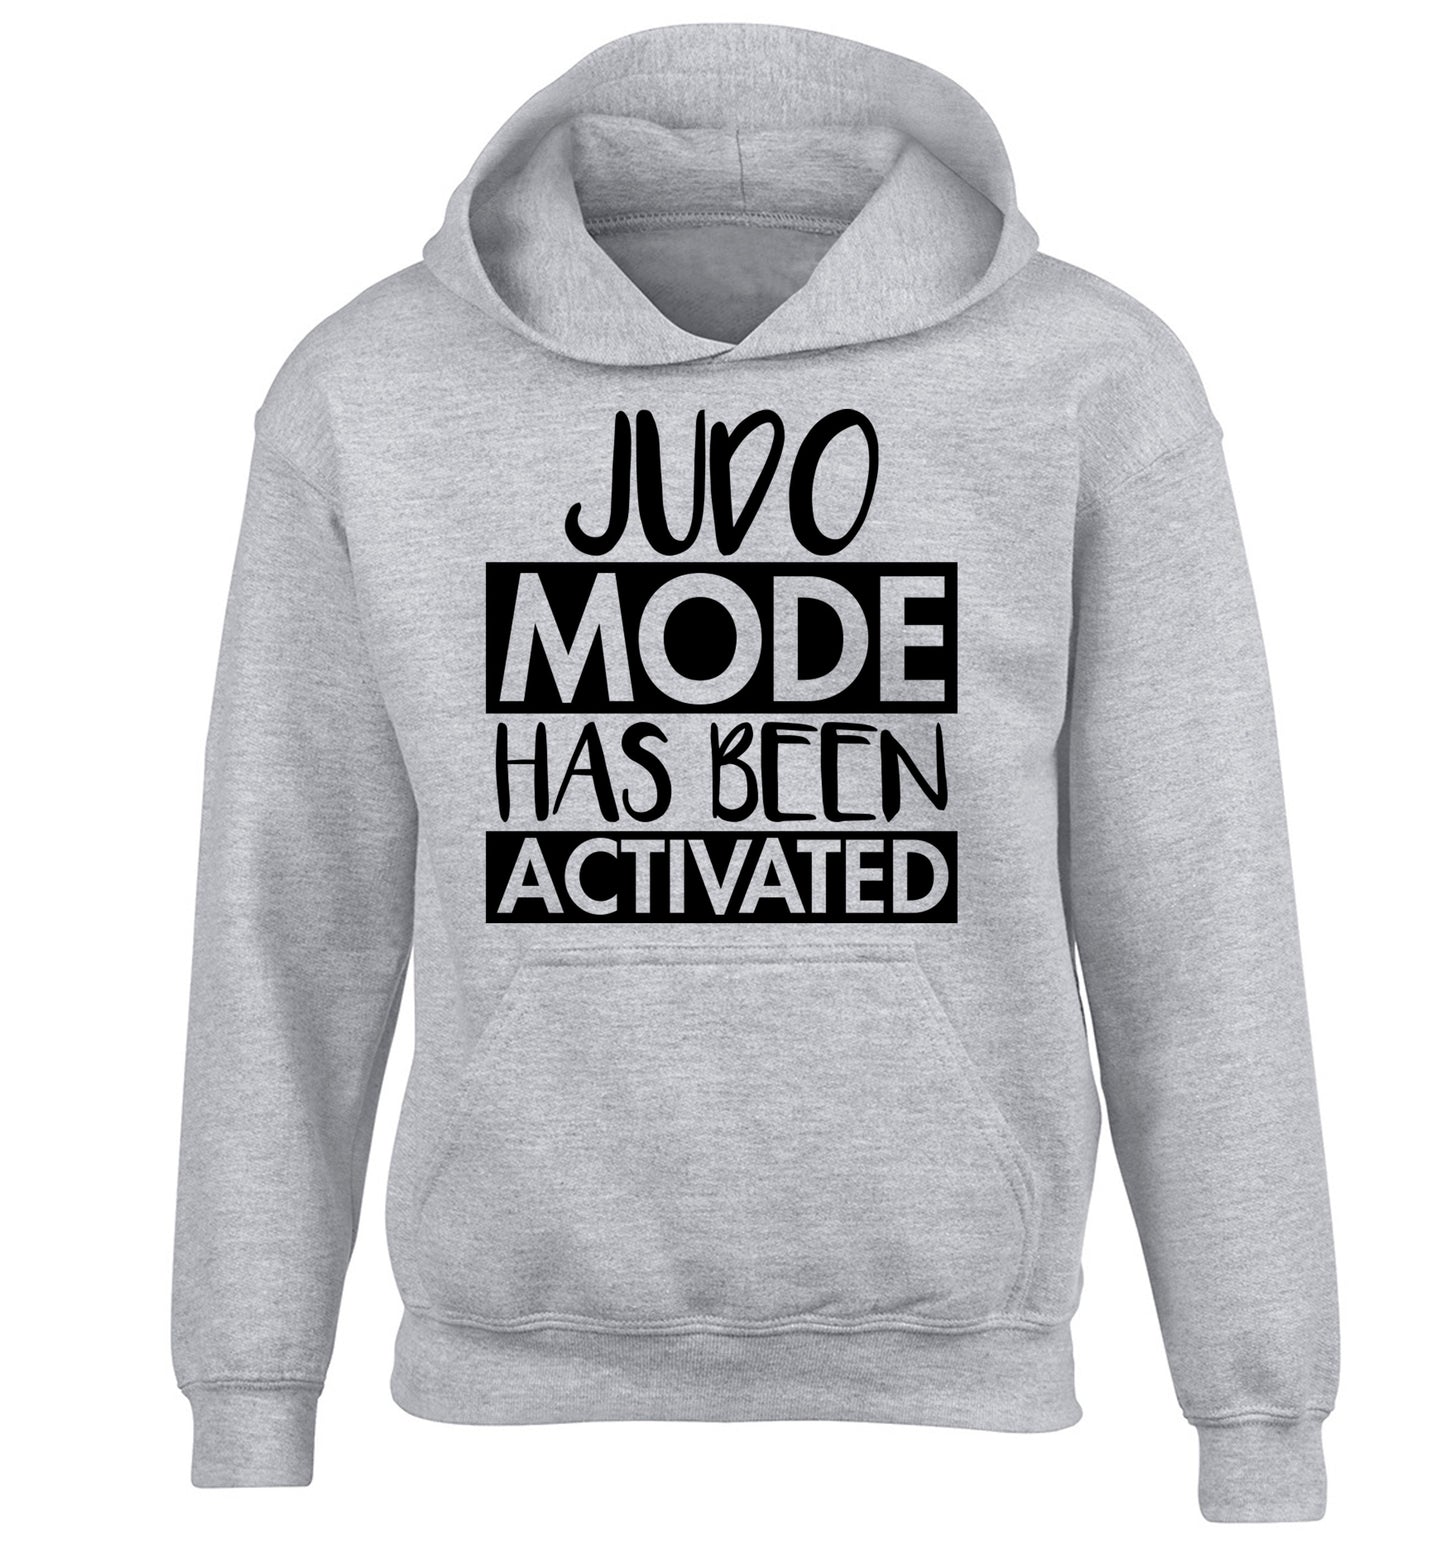 Judo mode activated children's grey hoodie 12-14 Years